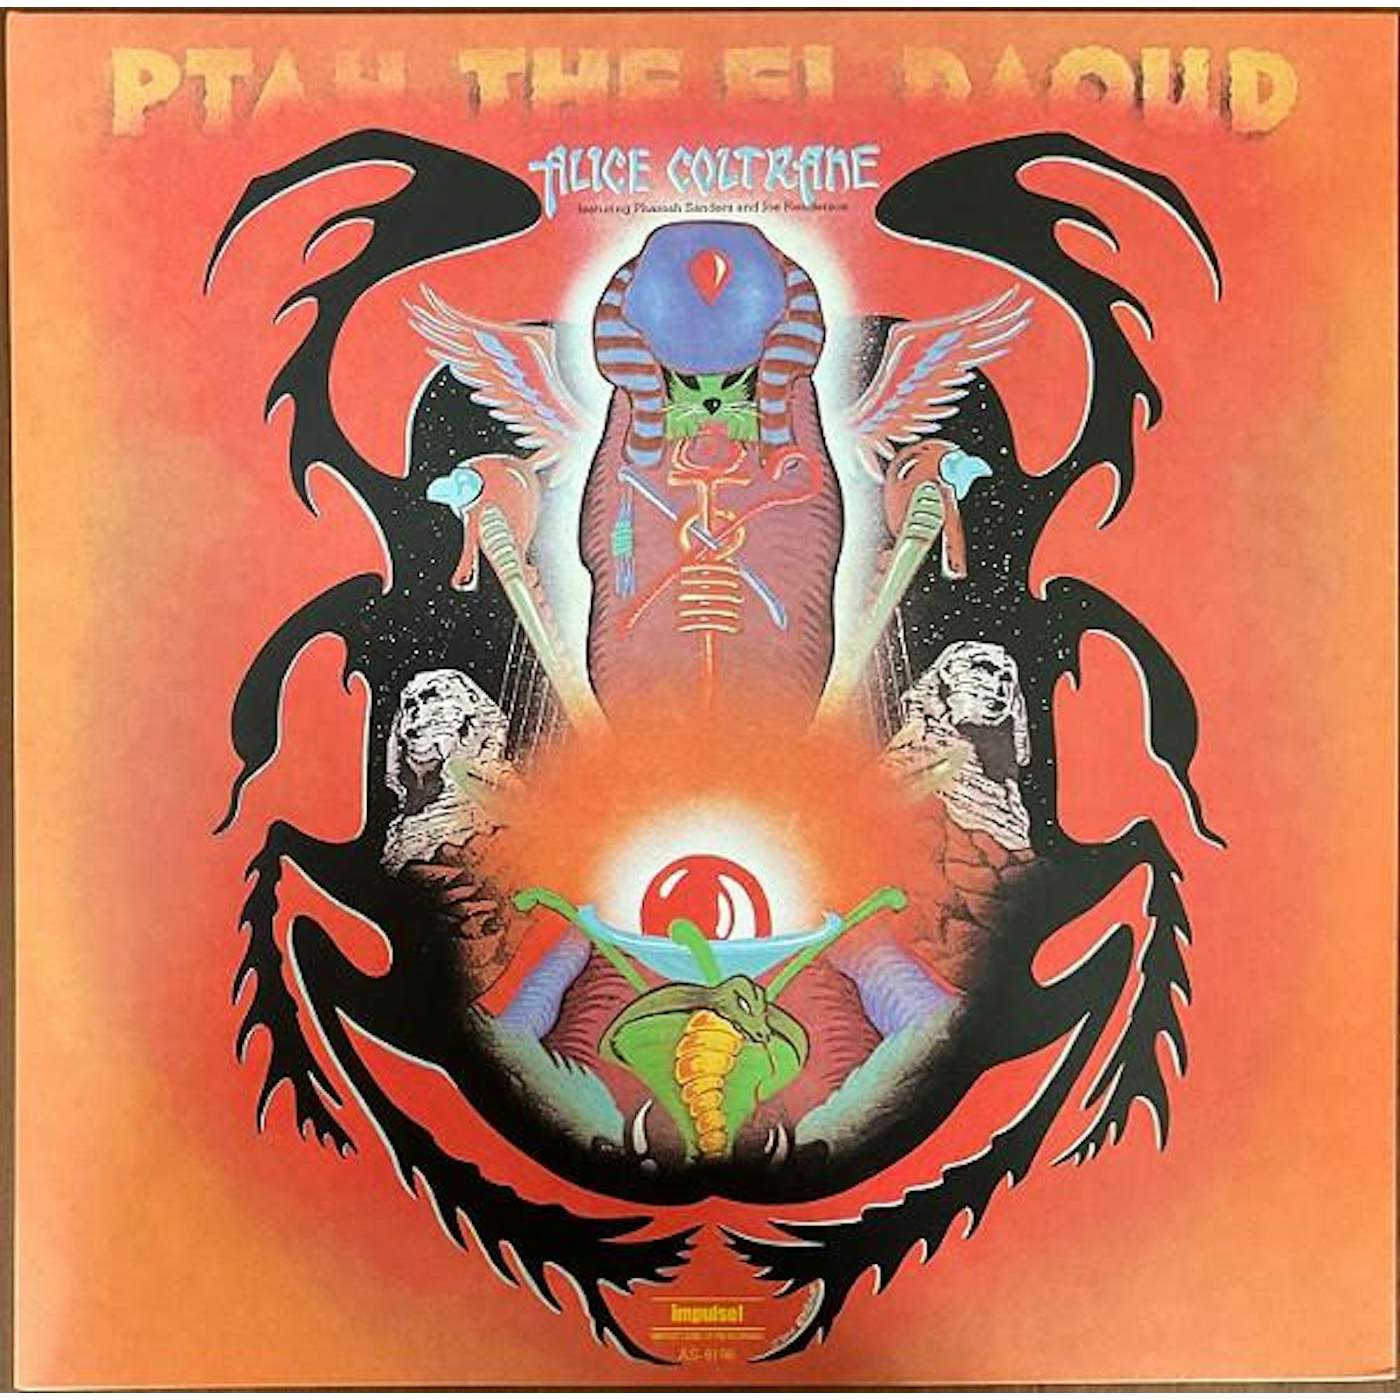 Alice Coltrane PTAH THE EL DAOUD (VERVE BY REQUEST SERIES) Vinyl Record